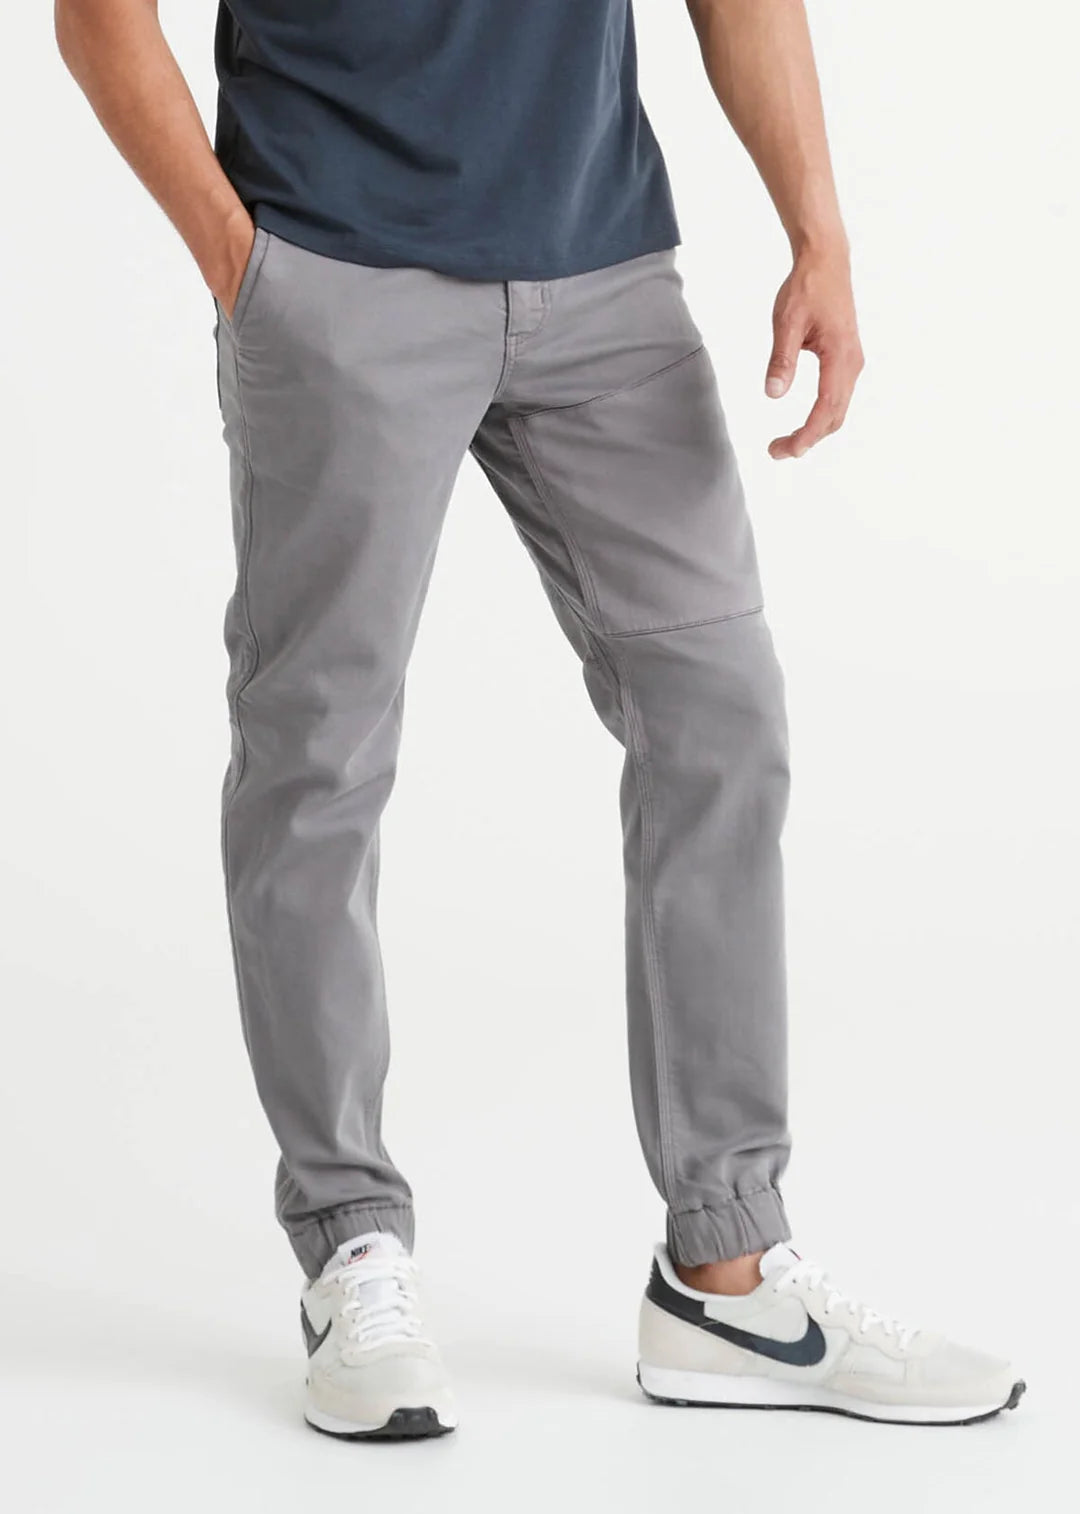  NIKE Men's Flex Core Pants, Dark Grey/Dark Grey, 30-32 :  Clothing, Shoes & Jewelry